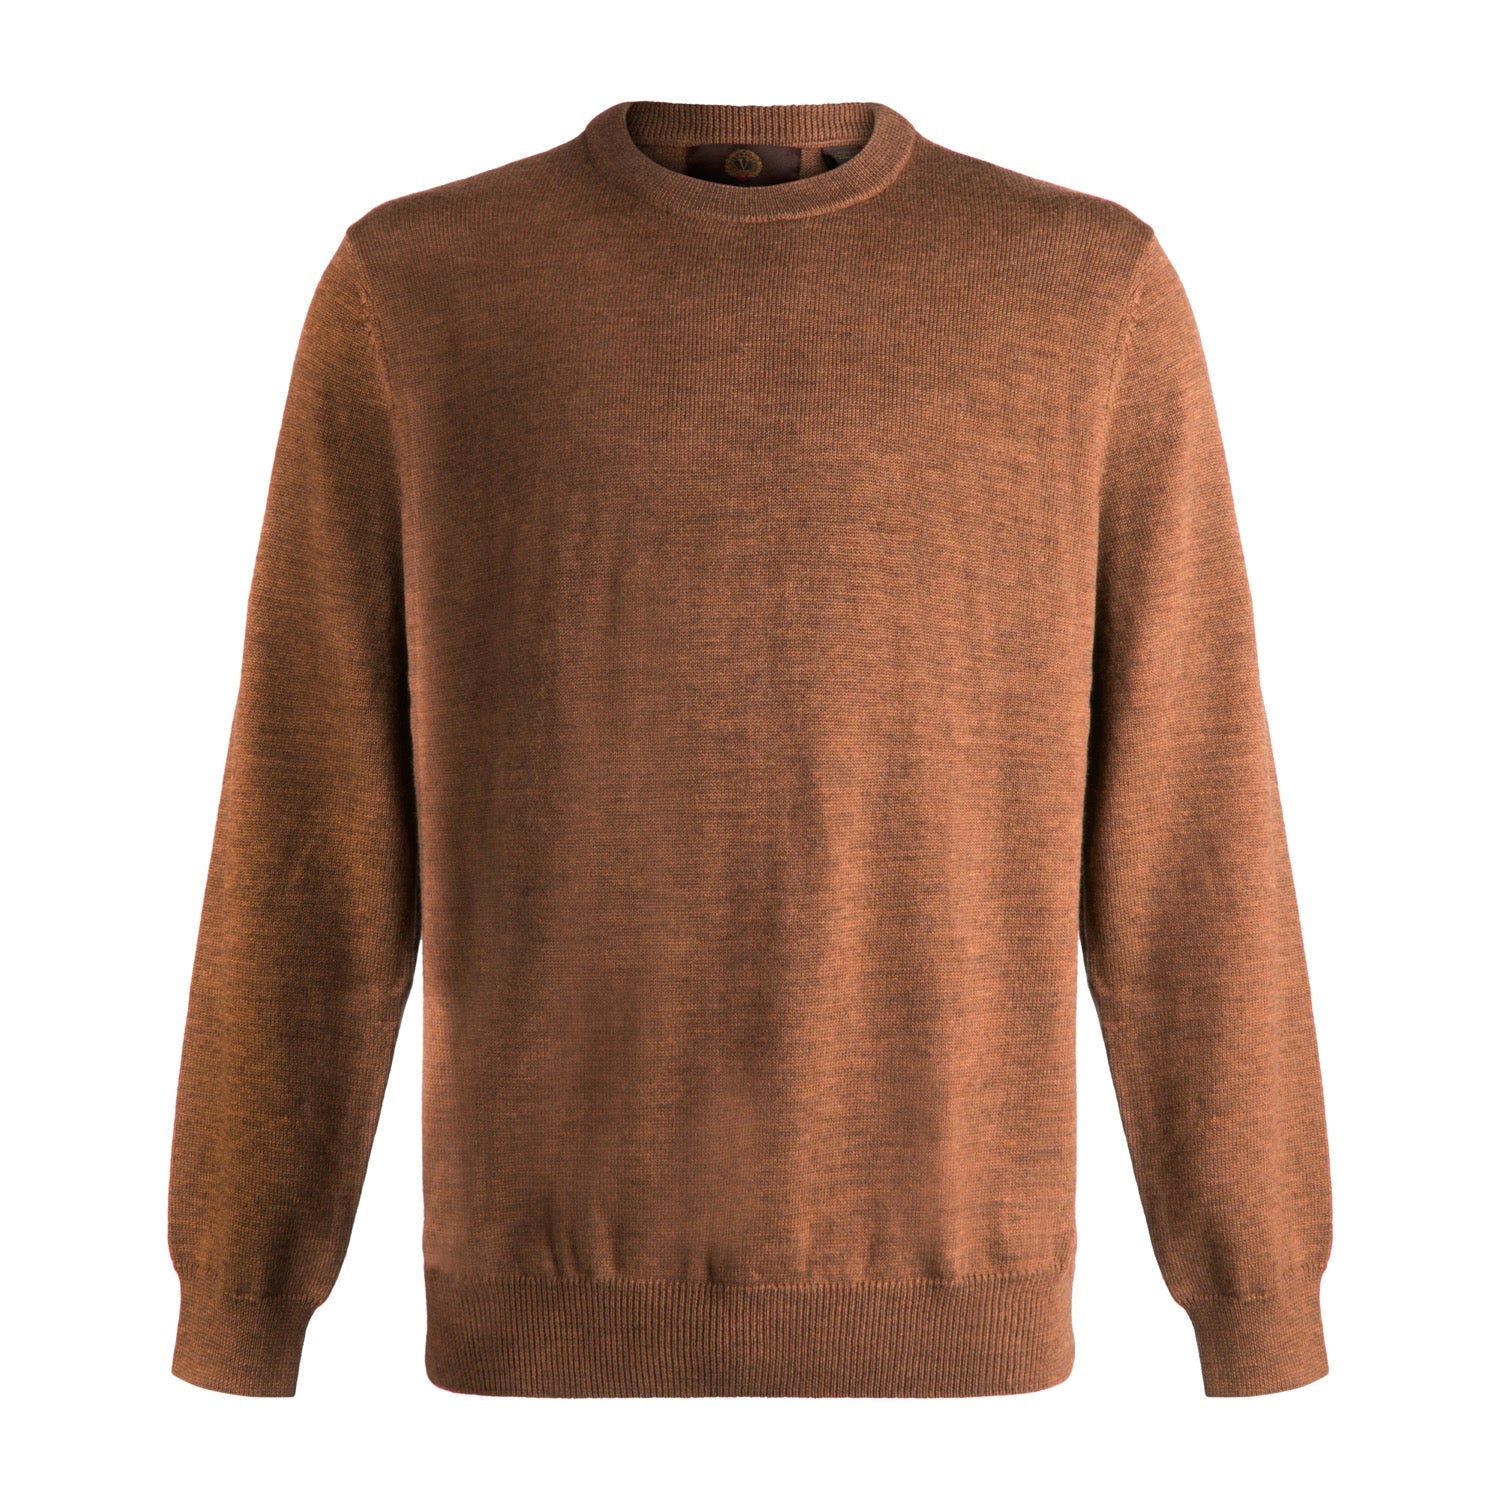 Extra Fine 'Zegna Baruffa' Merino Wool Crew Neck Sweater in Brown Melange by Viyella